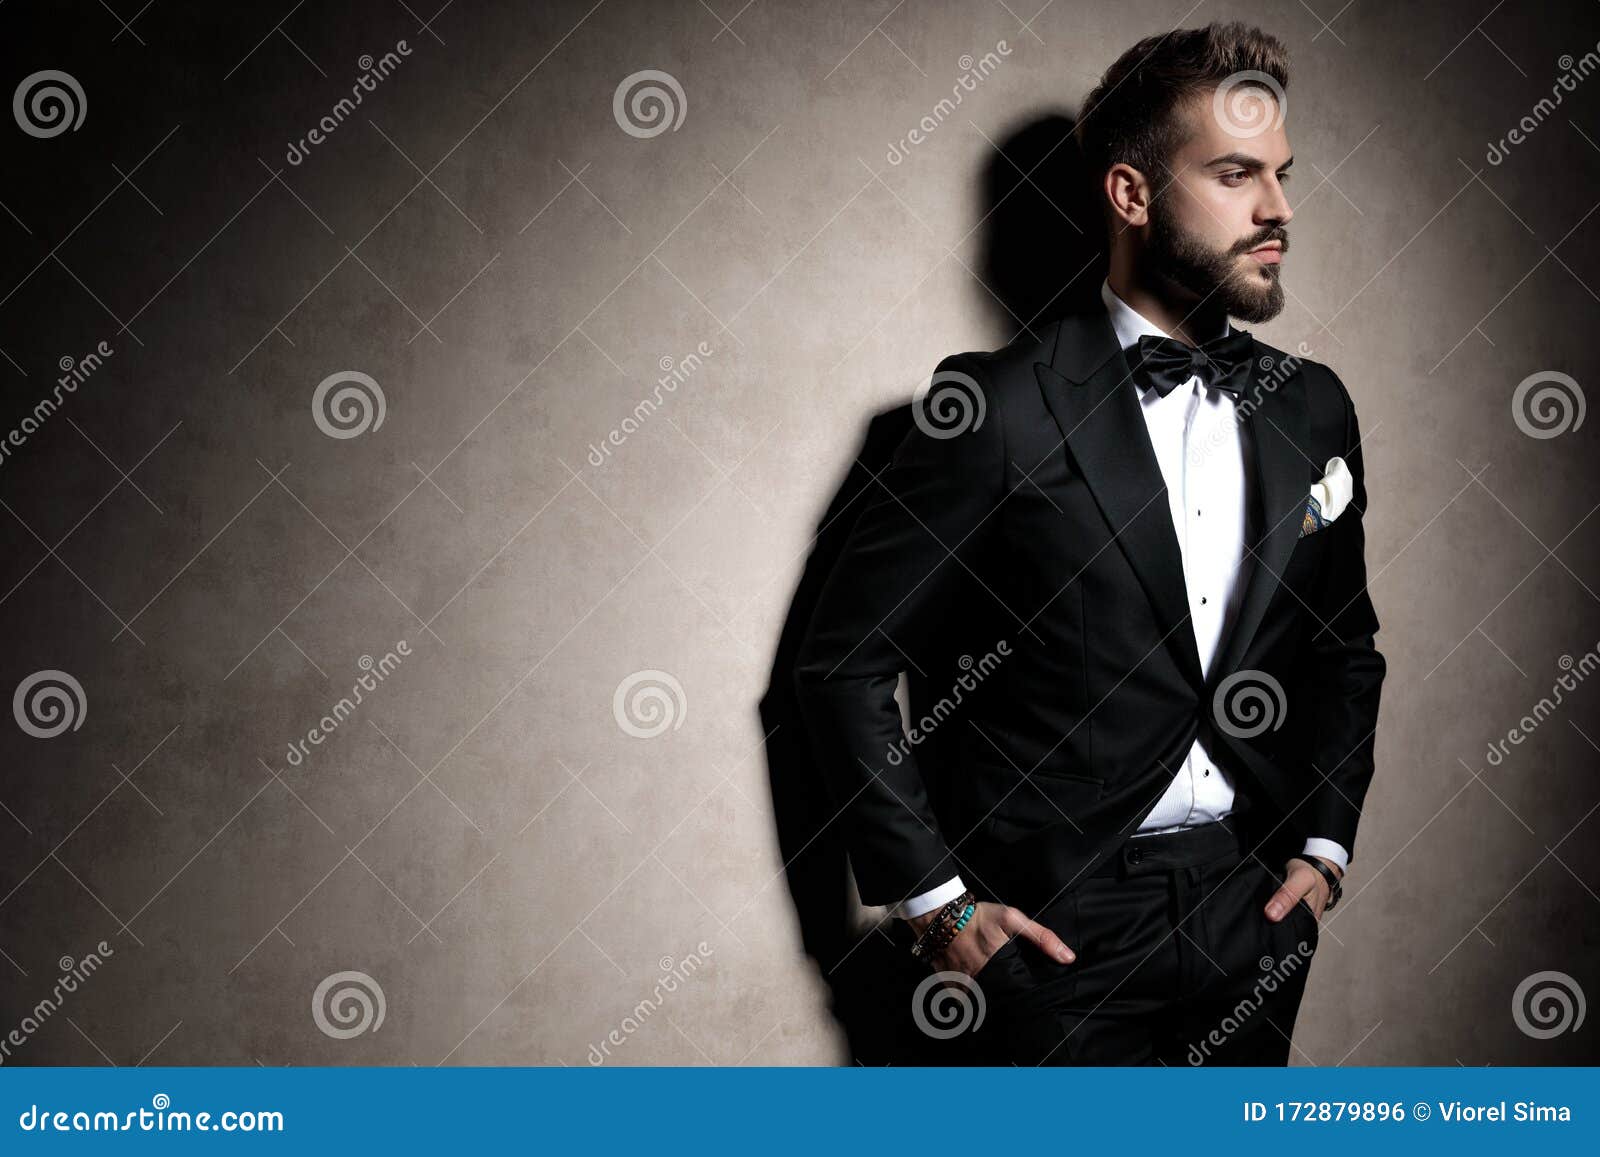 sexy young elegant guy in tuxedo posing